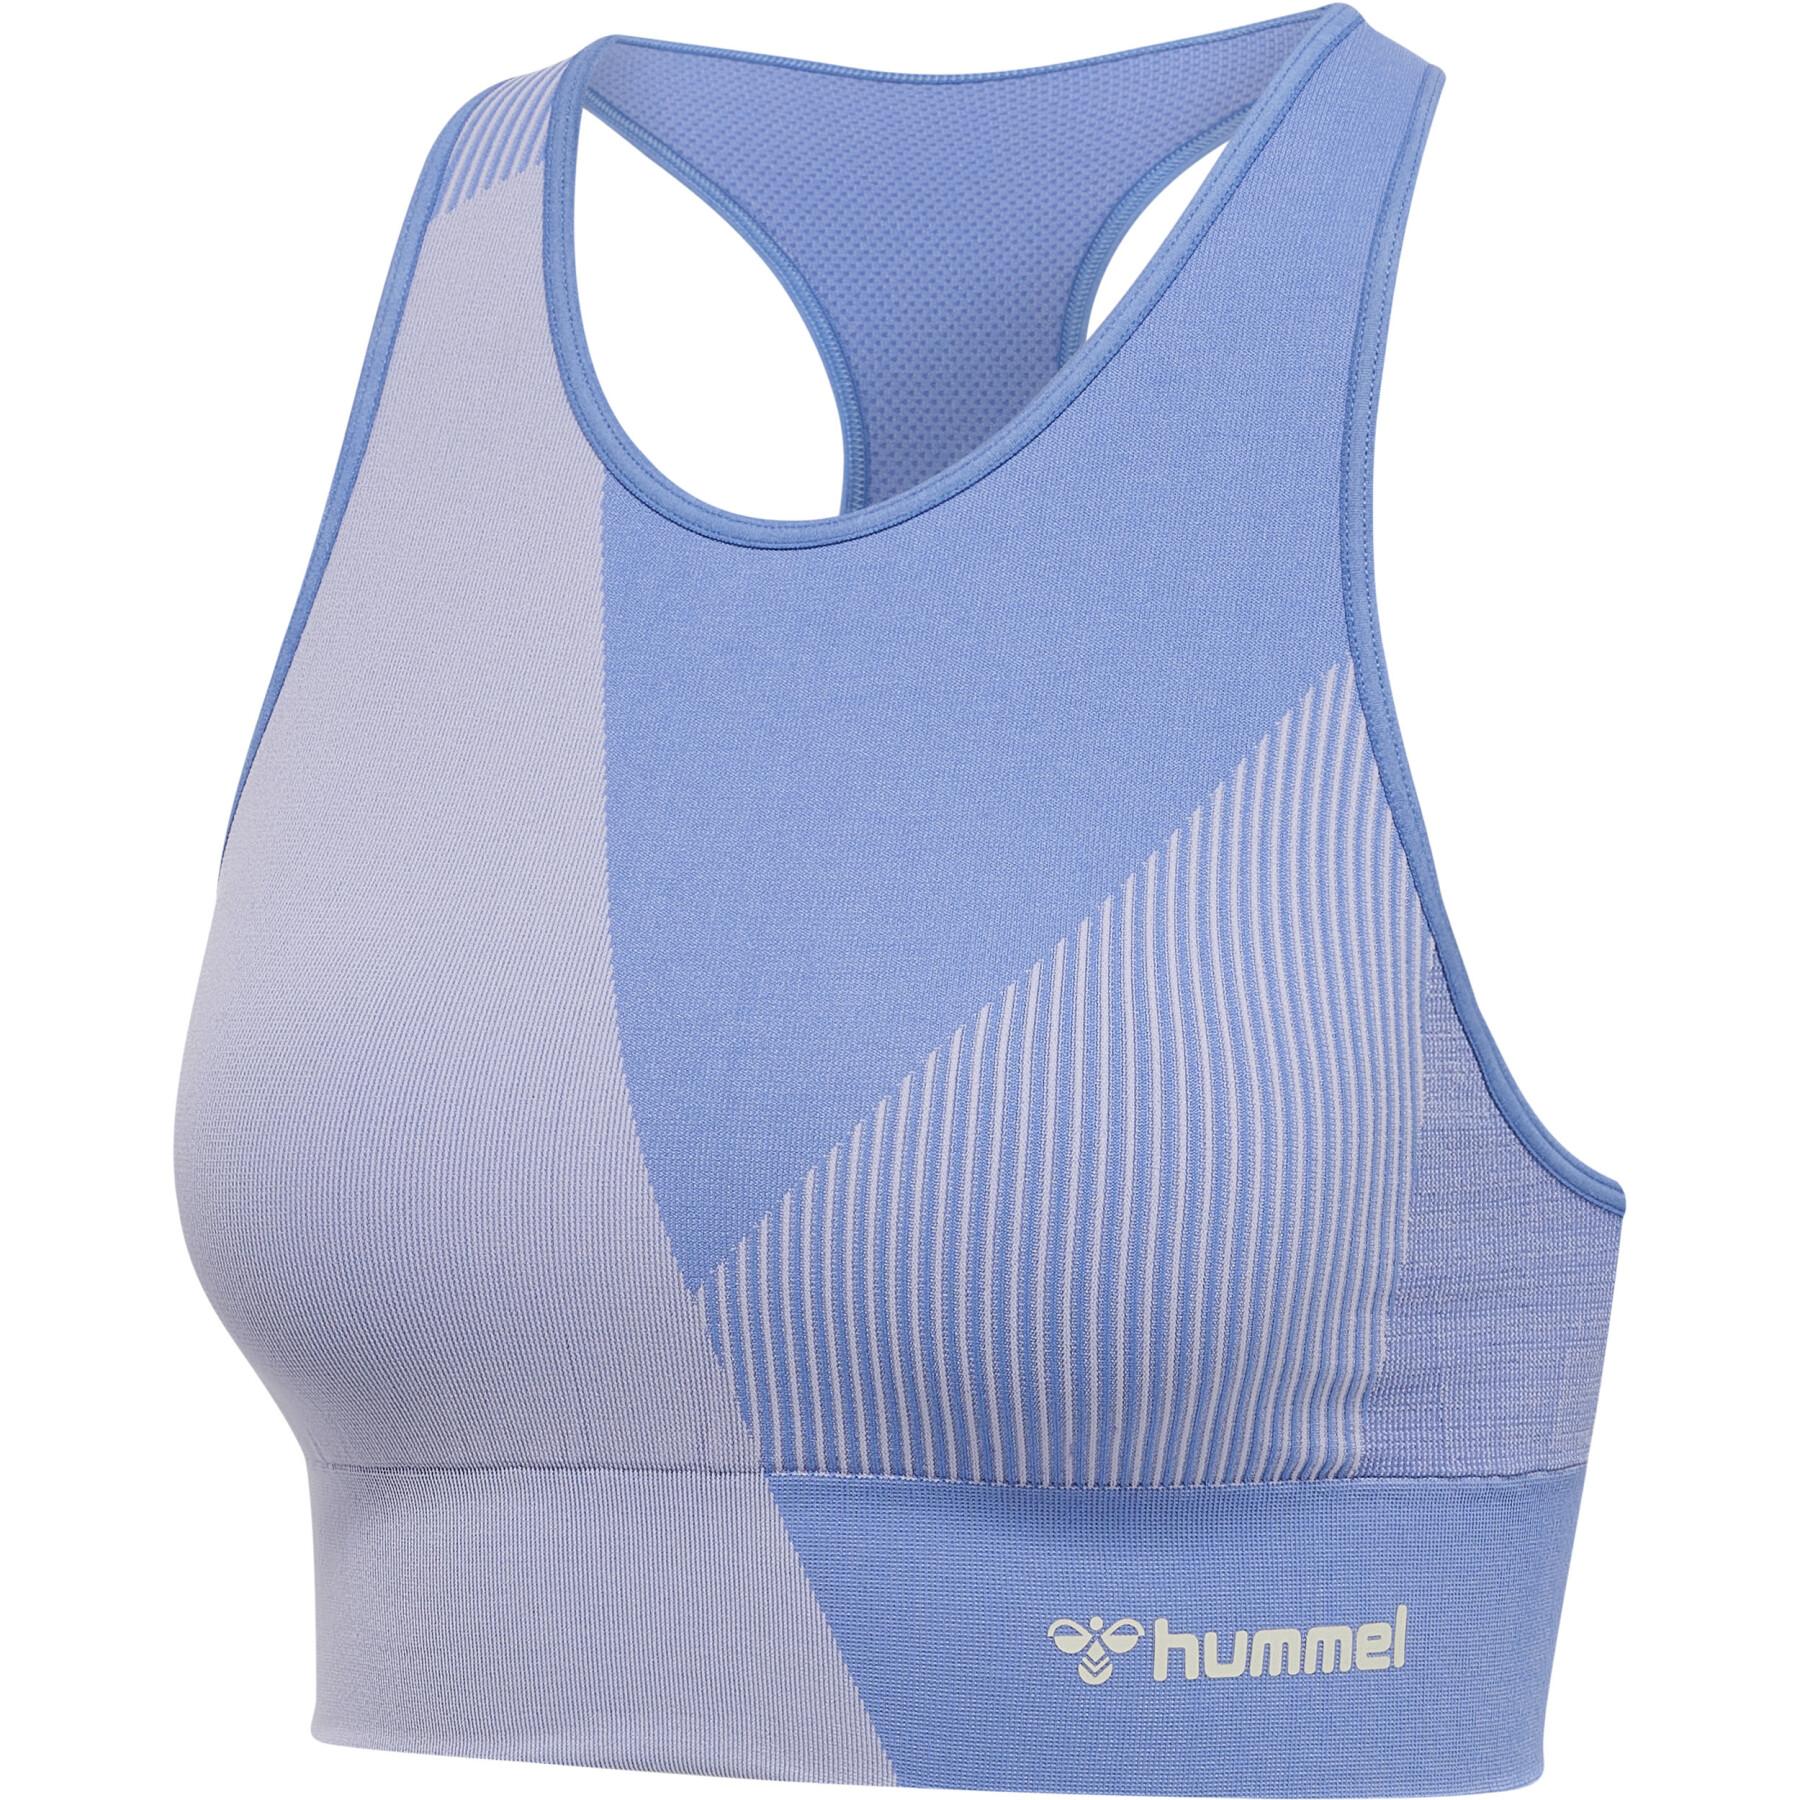 Hummel Hmltif Seamless Sports Top - Sports bras